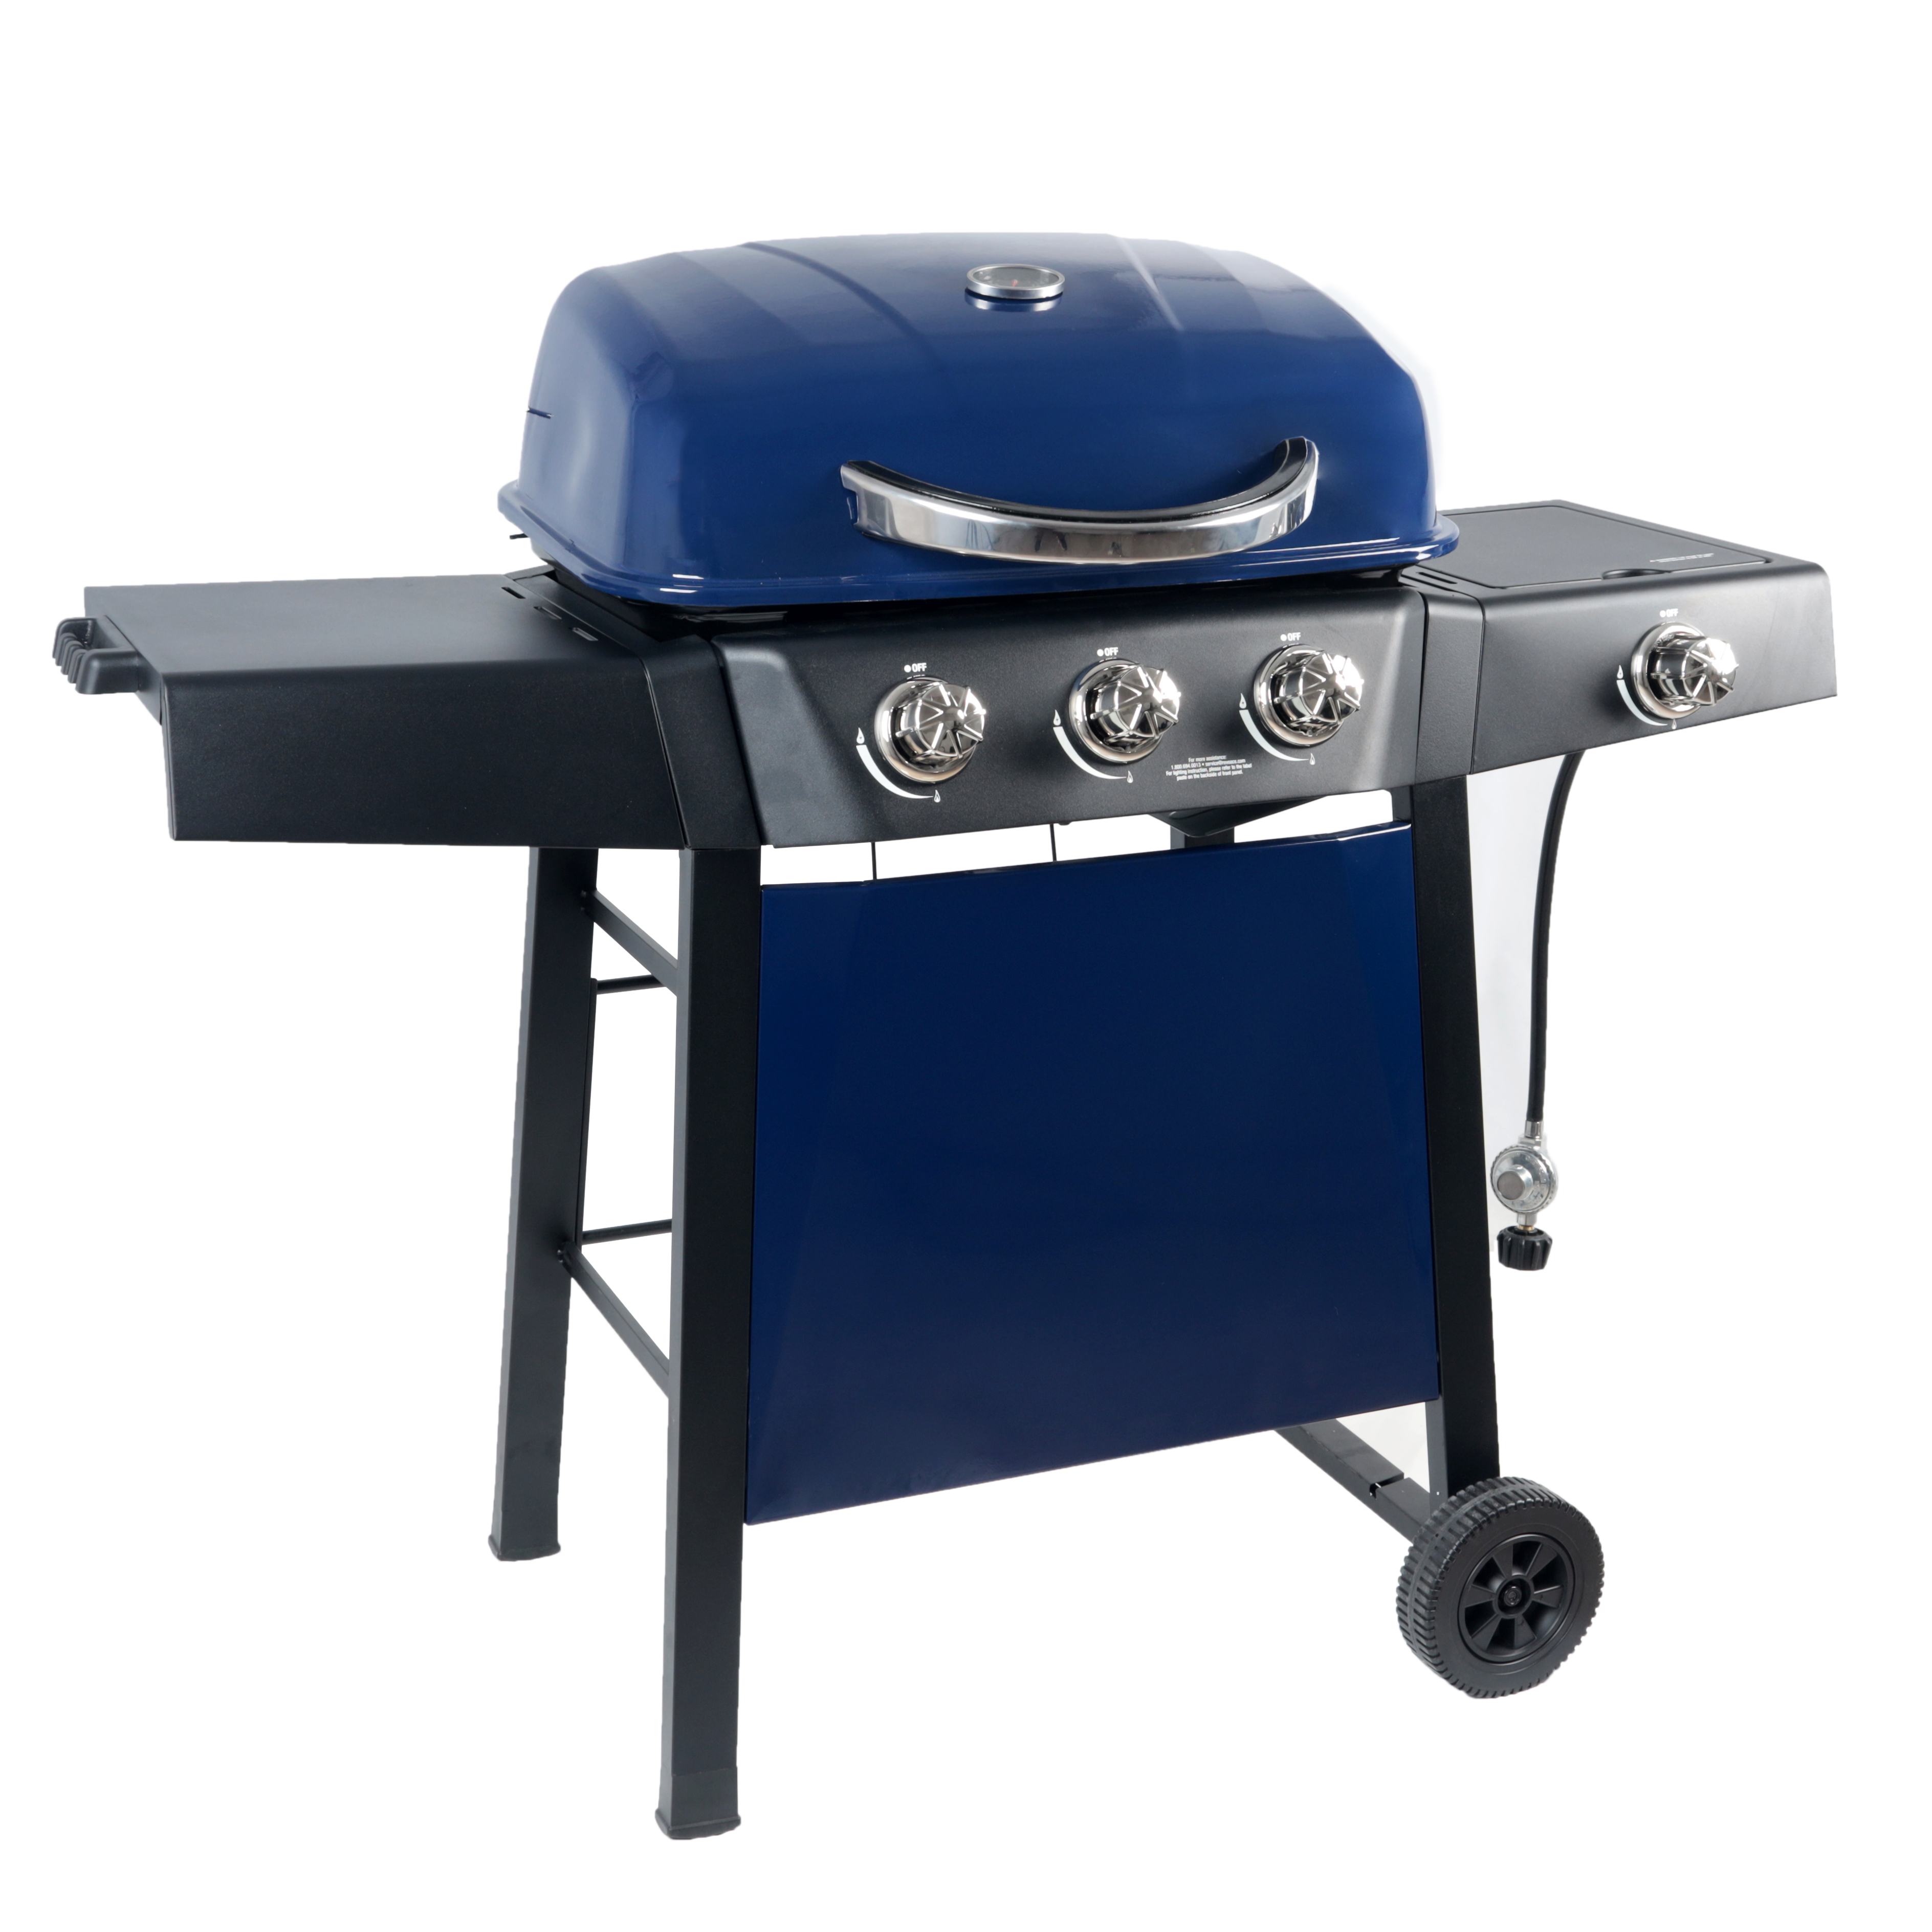 RevoAce 4 Burner Propane Gas Grill Including a Side Burner, Blue Sapphire, GBC1729WBS - image 4 of 18